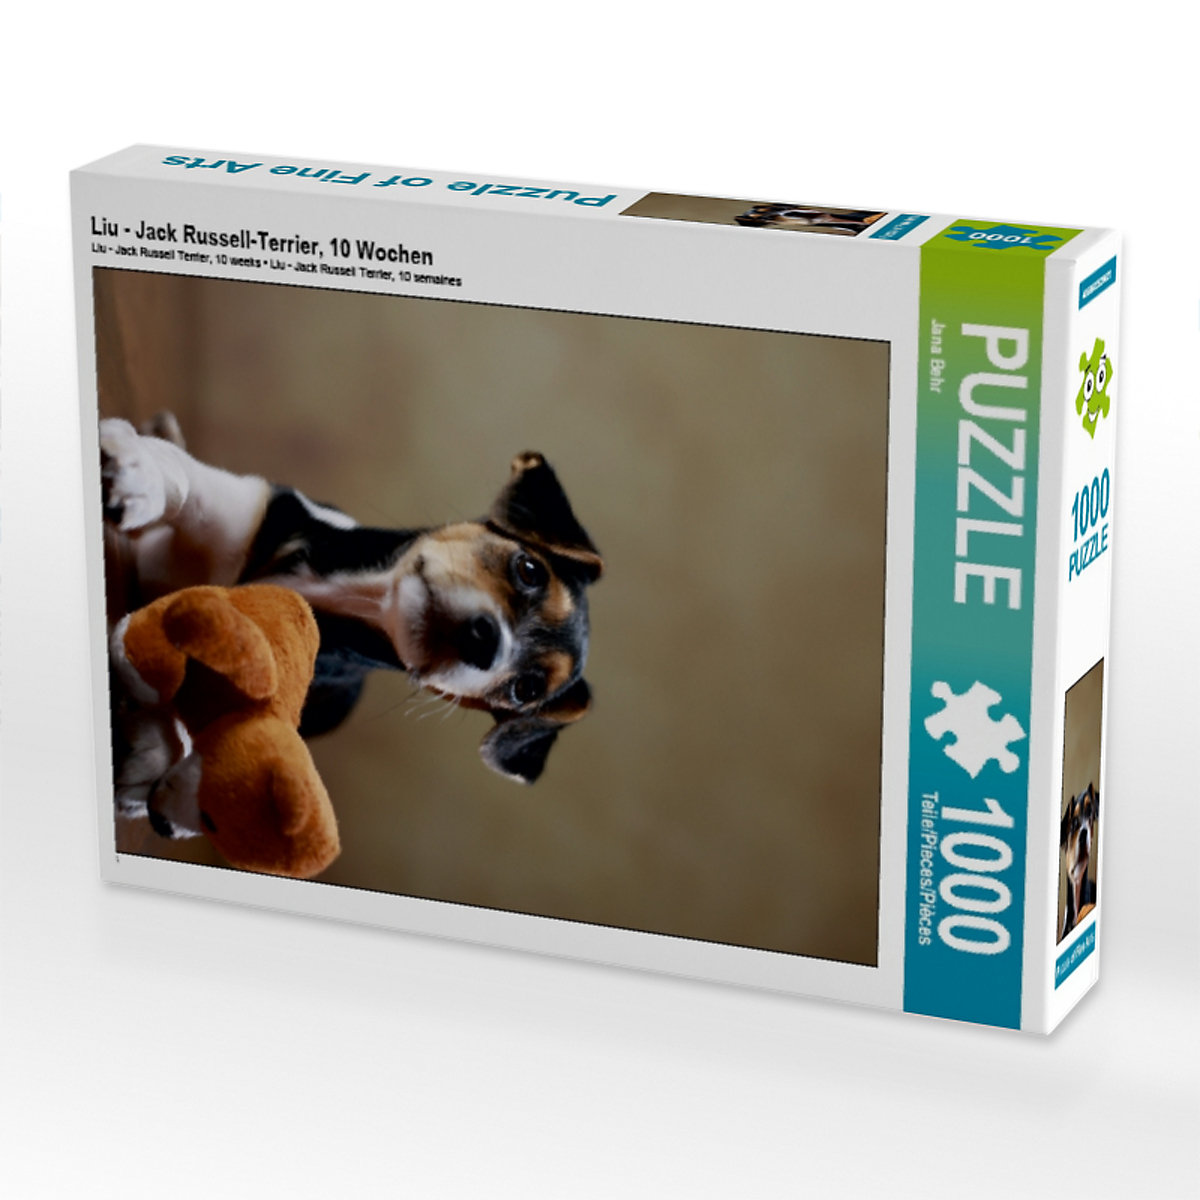 CALVENDO® Puzzle CALVENDO Puzzle Liu Jack Russell-Terrier 10 Wochen 1000 Teile Foto-Puzzle für glückliche Stunden